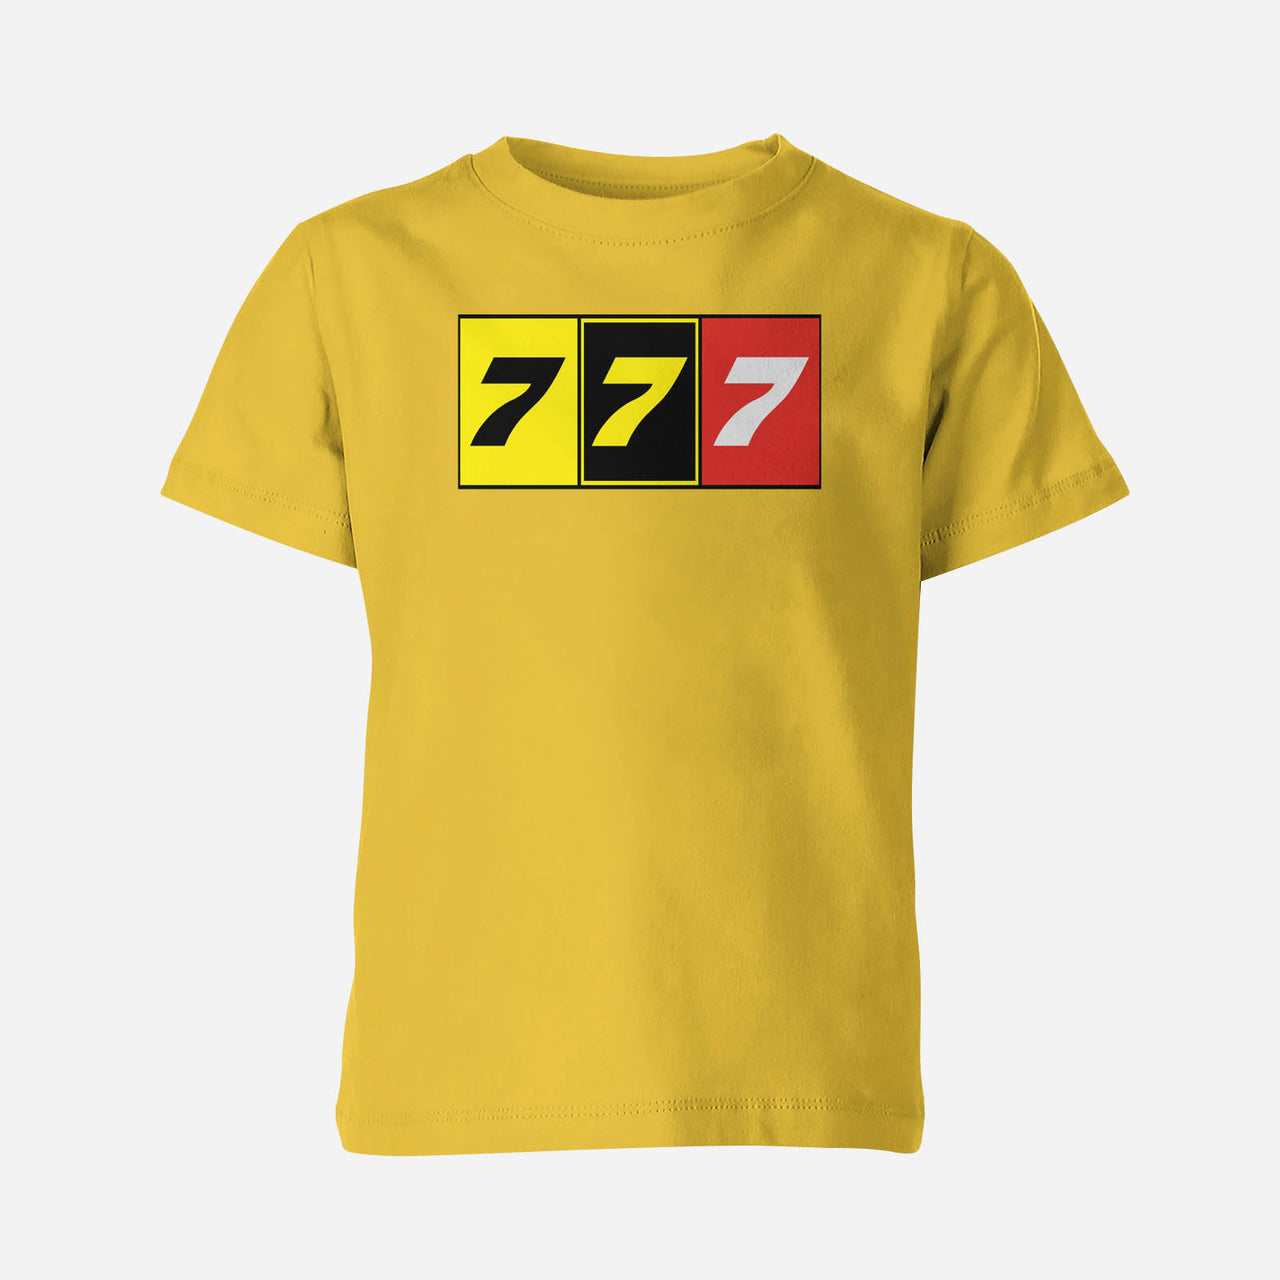 Flat Colourful 777 Designed Children T-Shirts